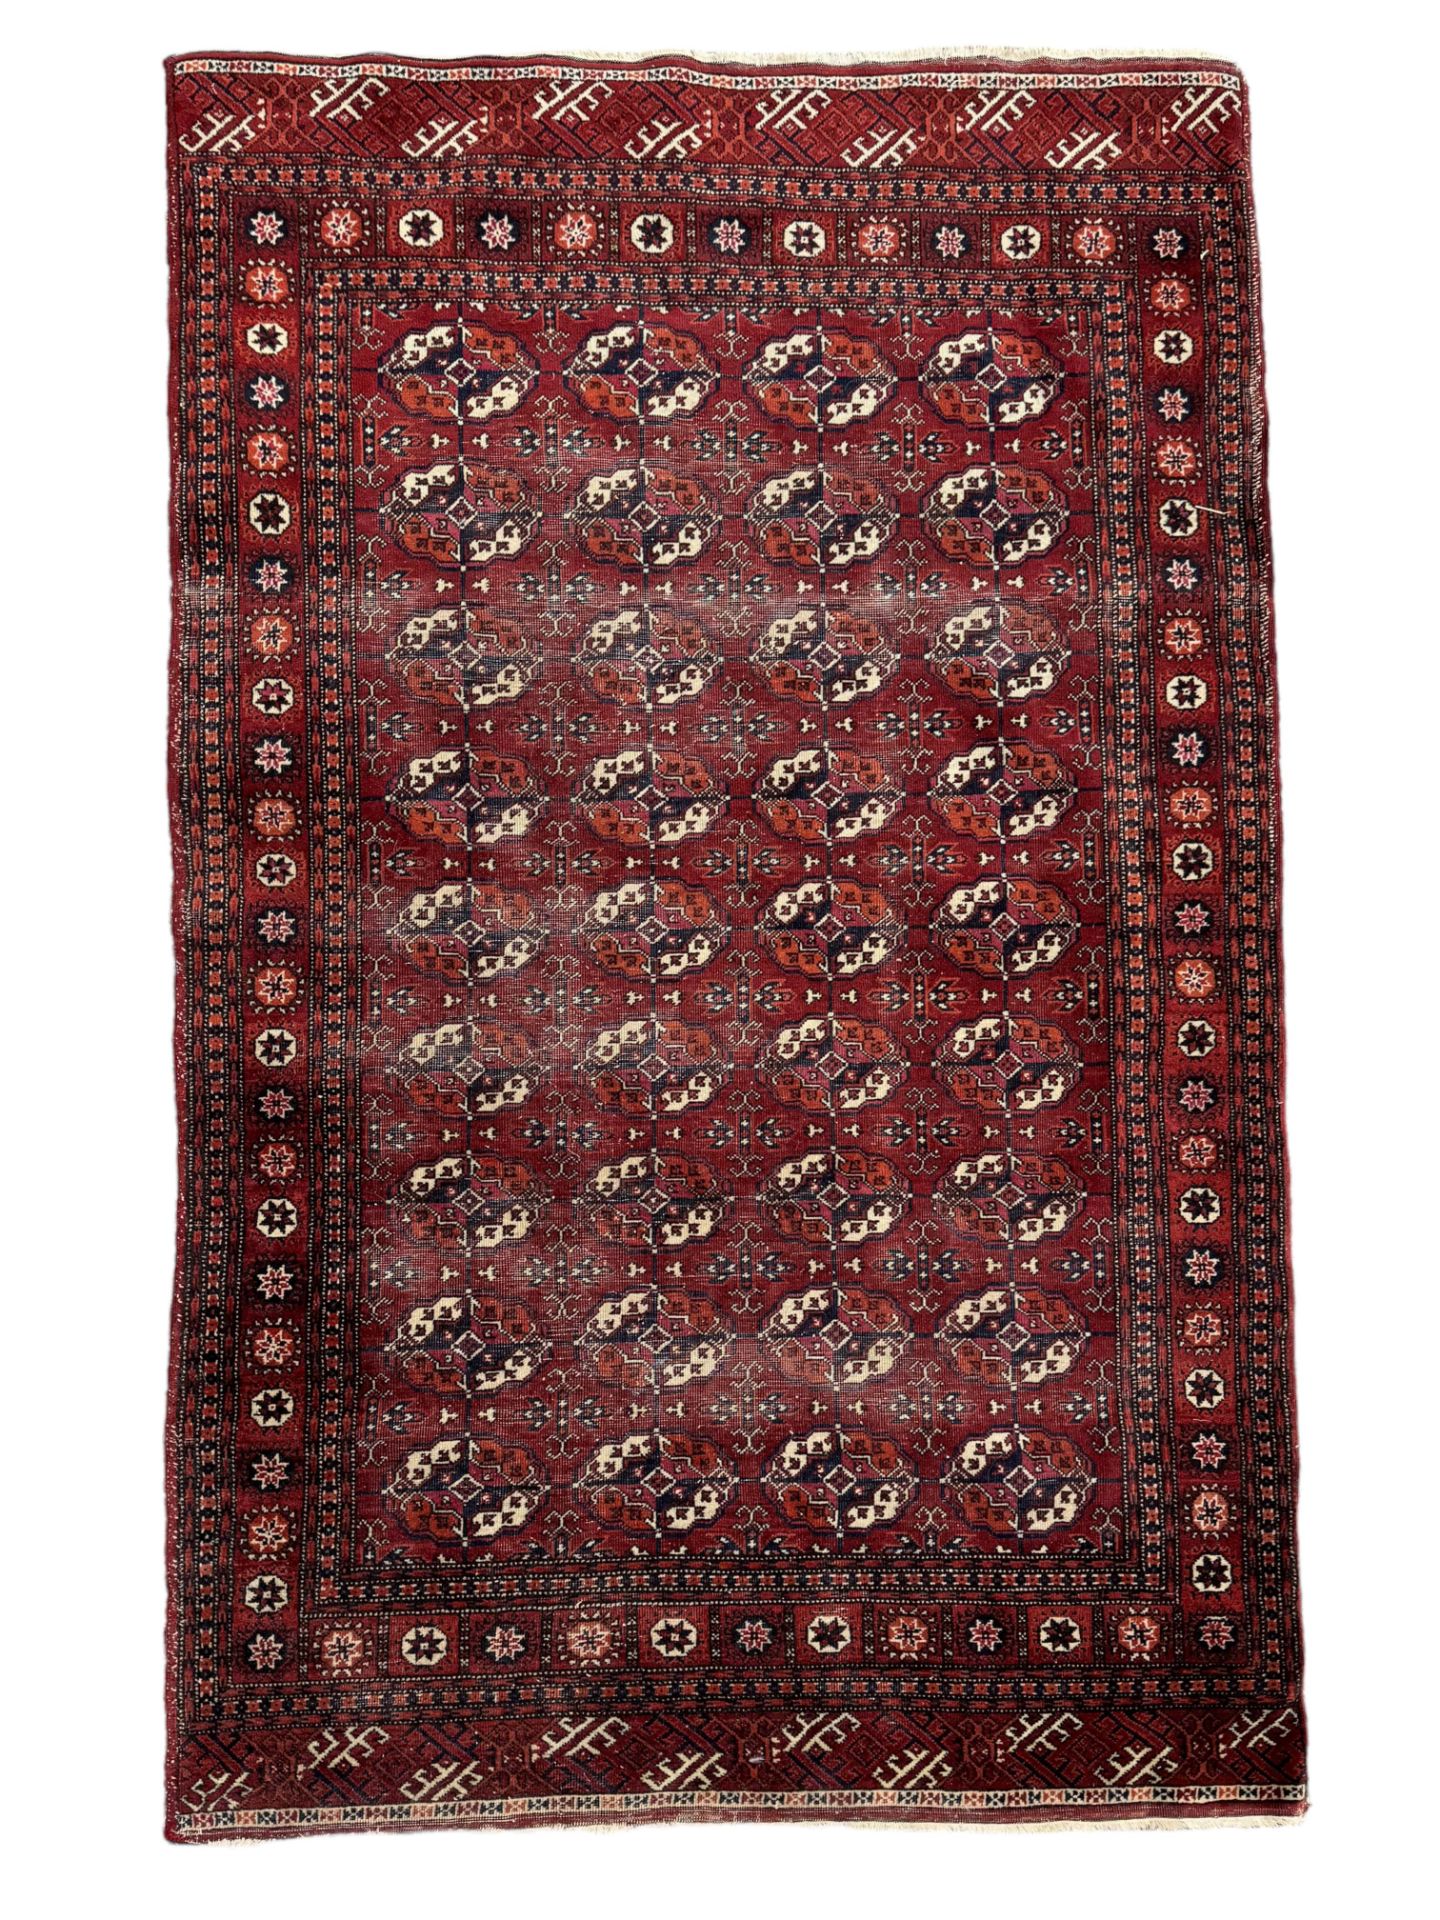 A Tekke Bokhara rug, mid 20th century